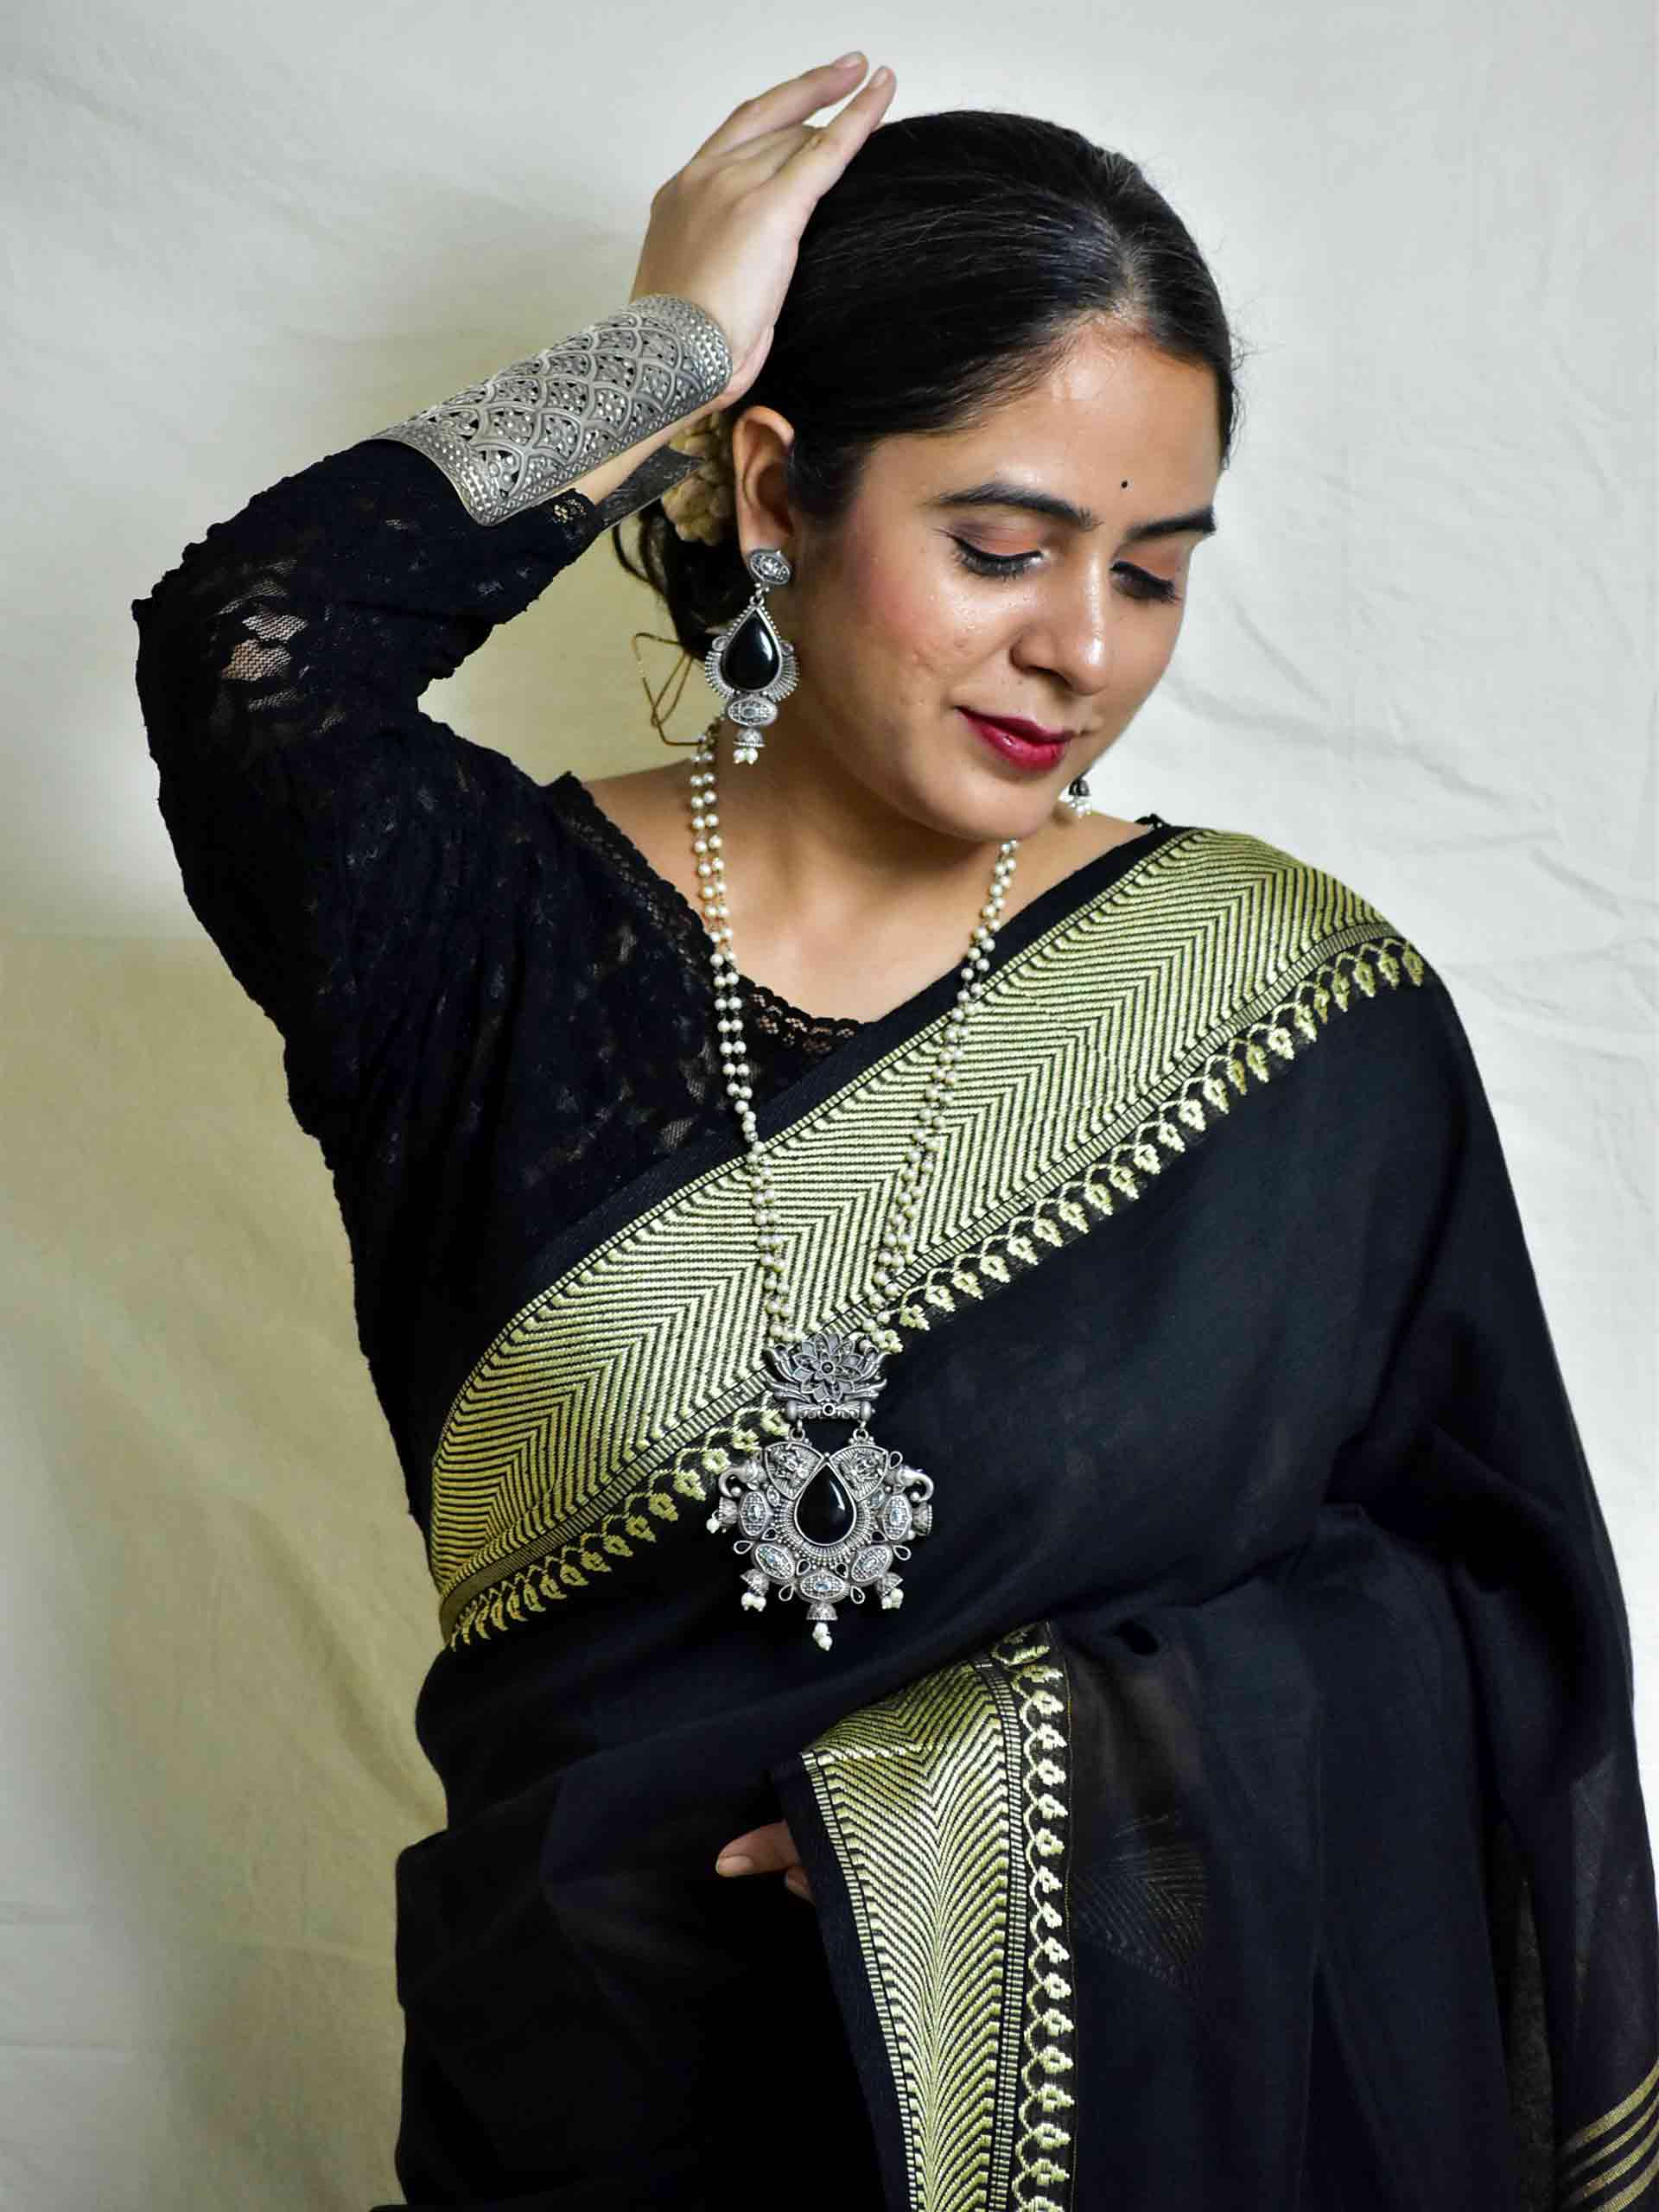 cotton saree with woven border